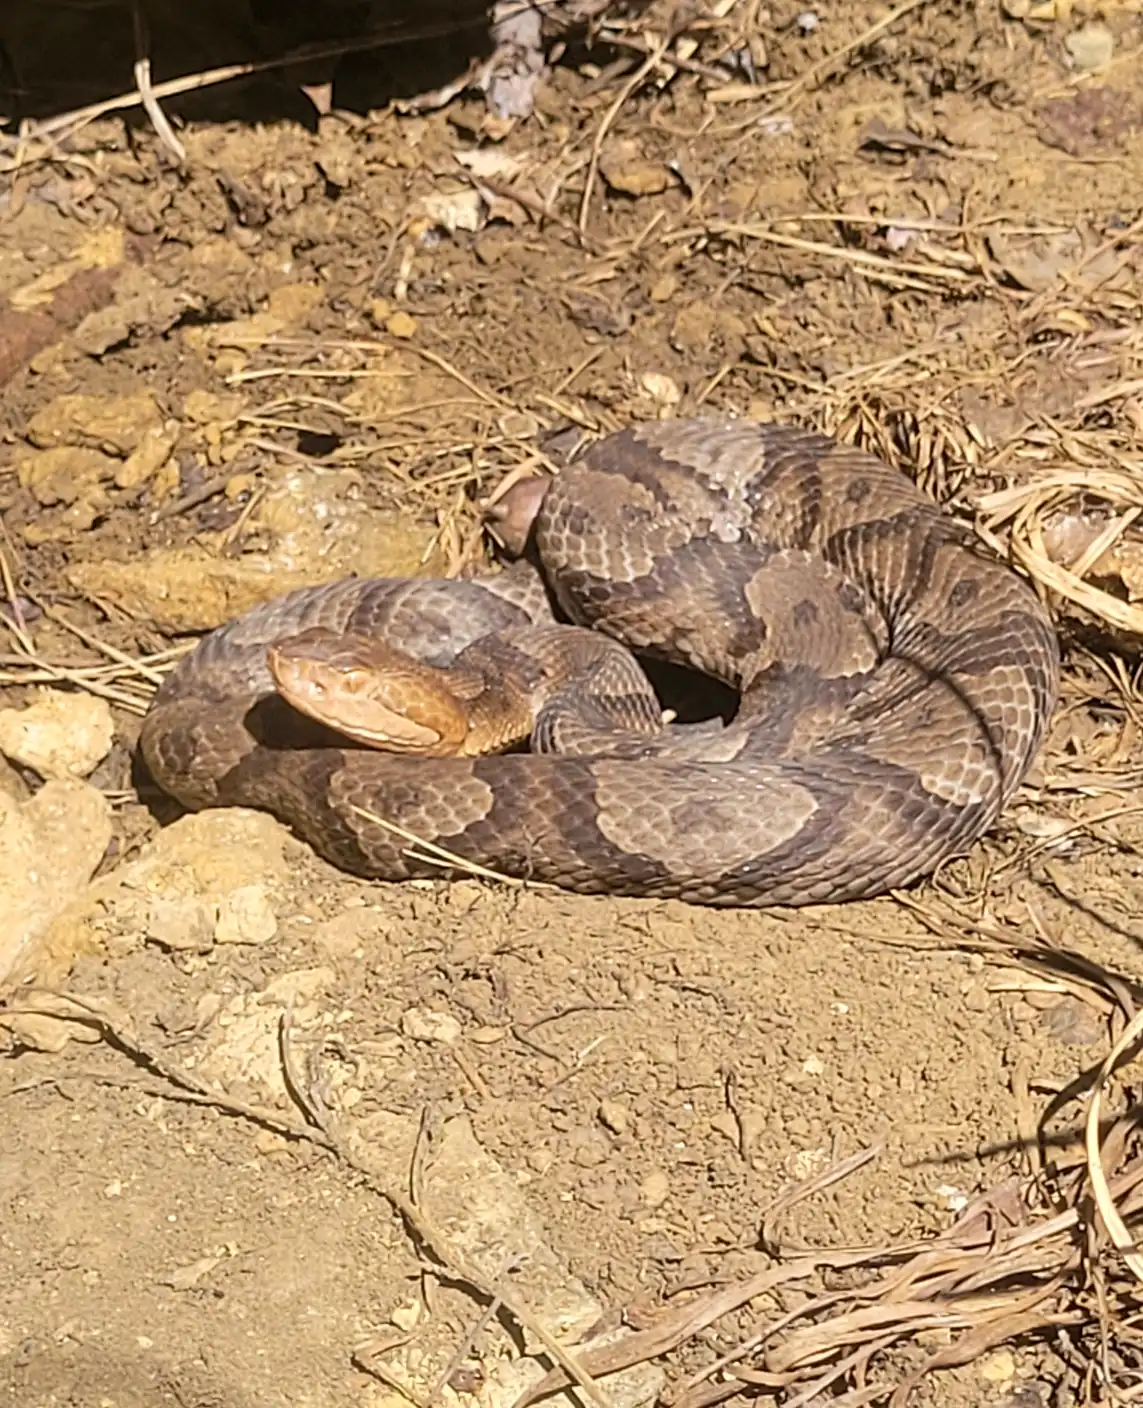 Eastern copper head snake basking in the sun